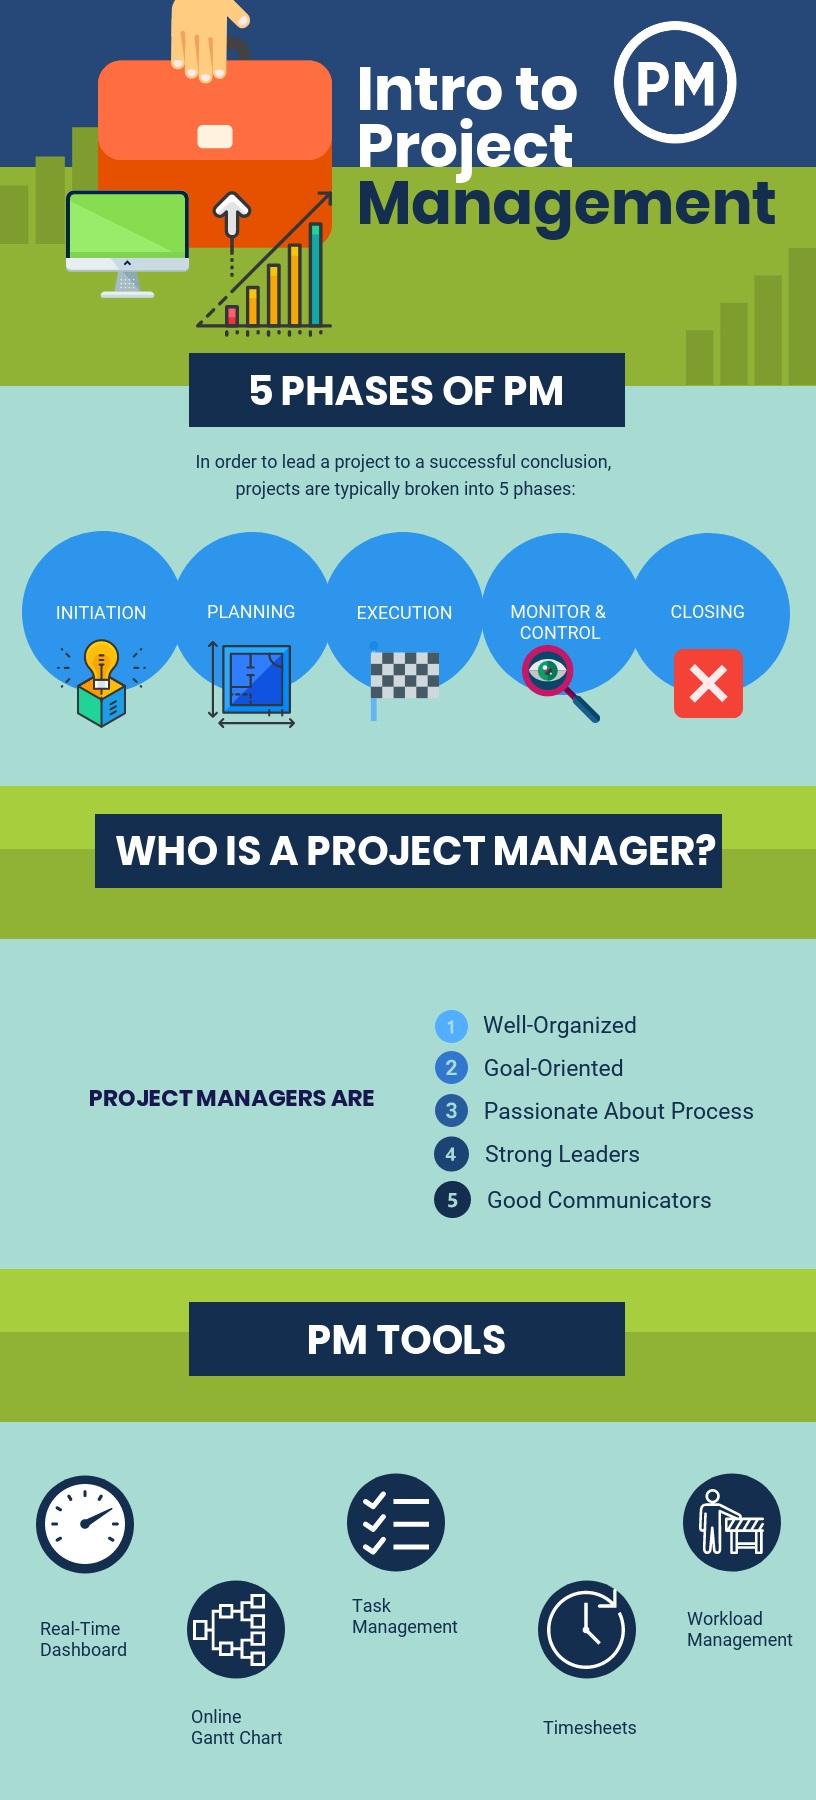 project management 101 presentation